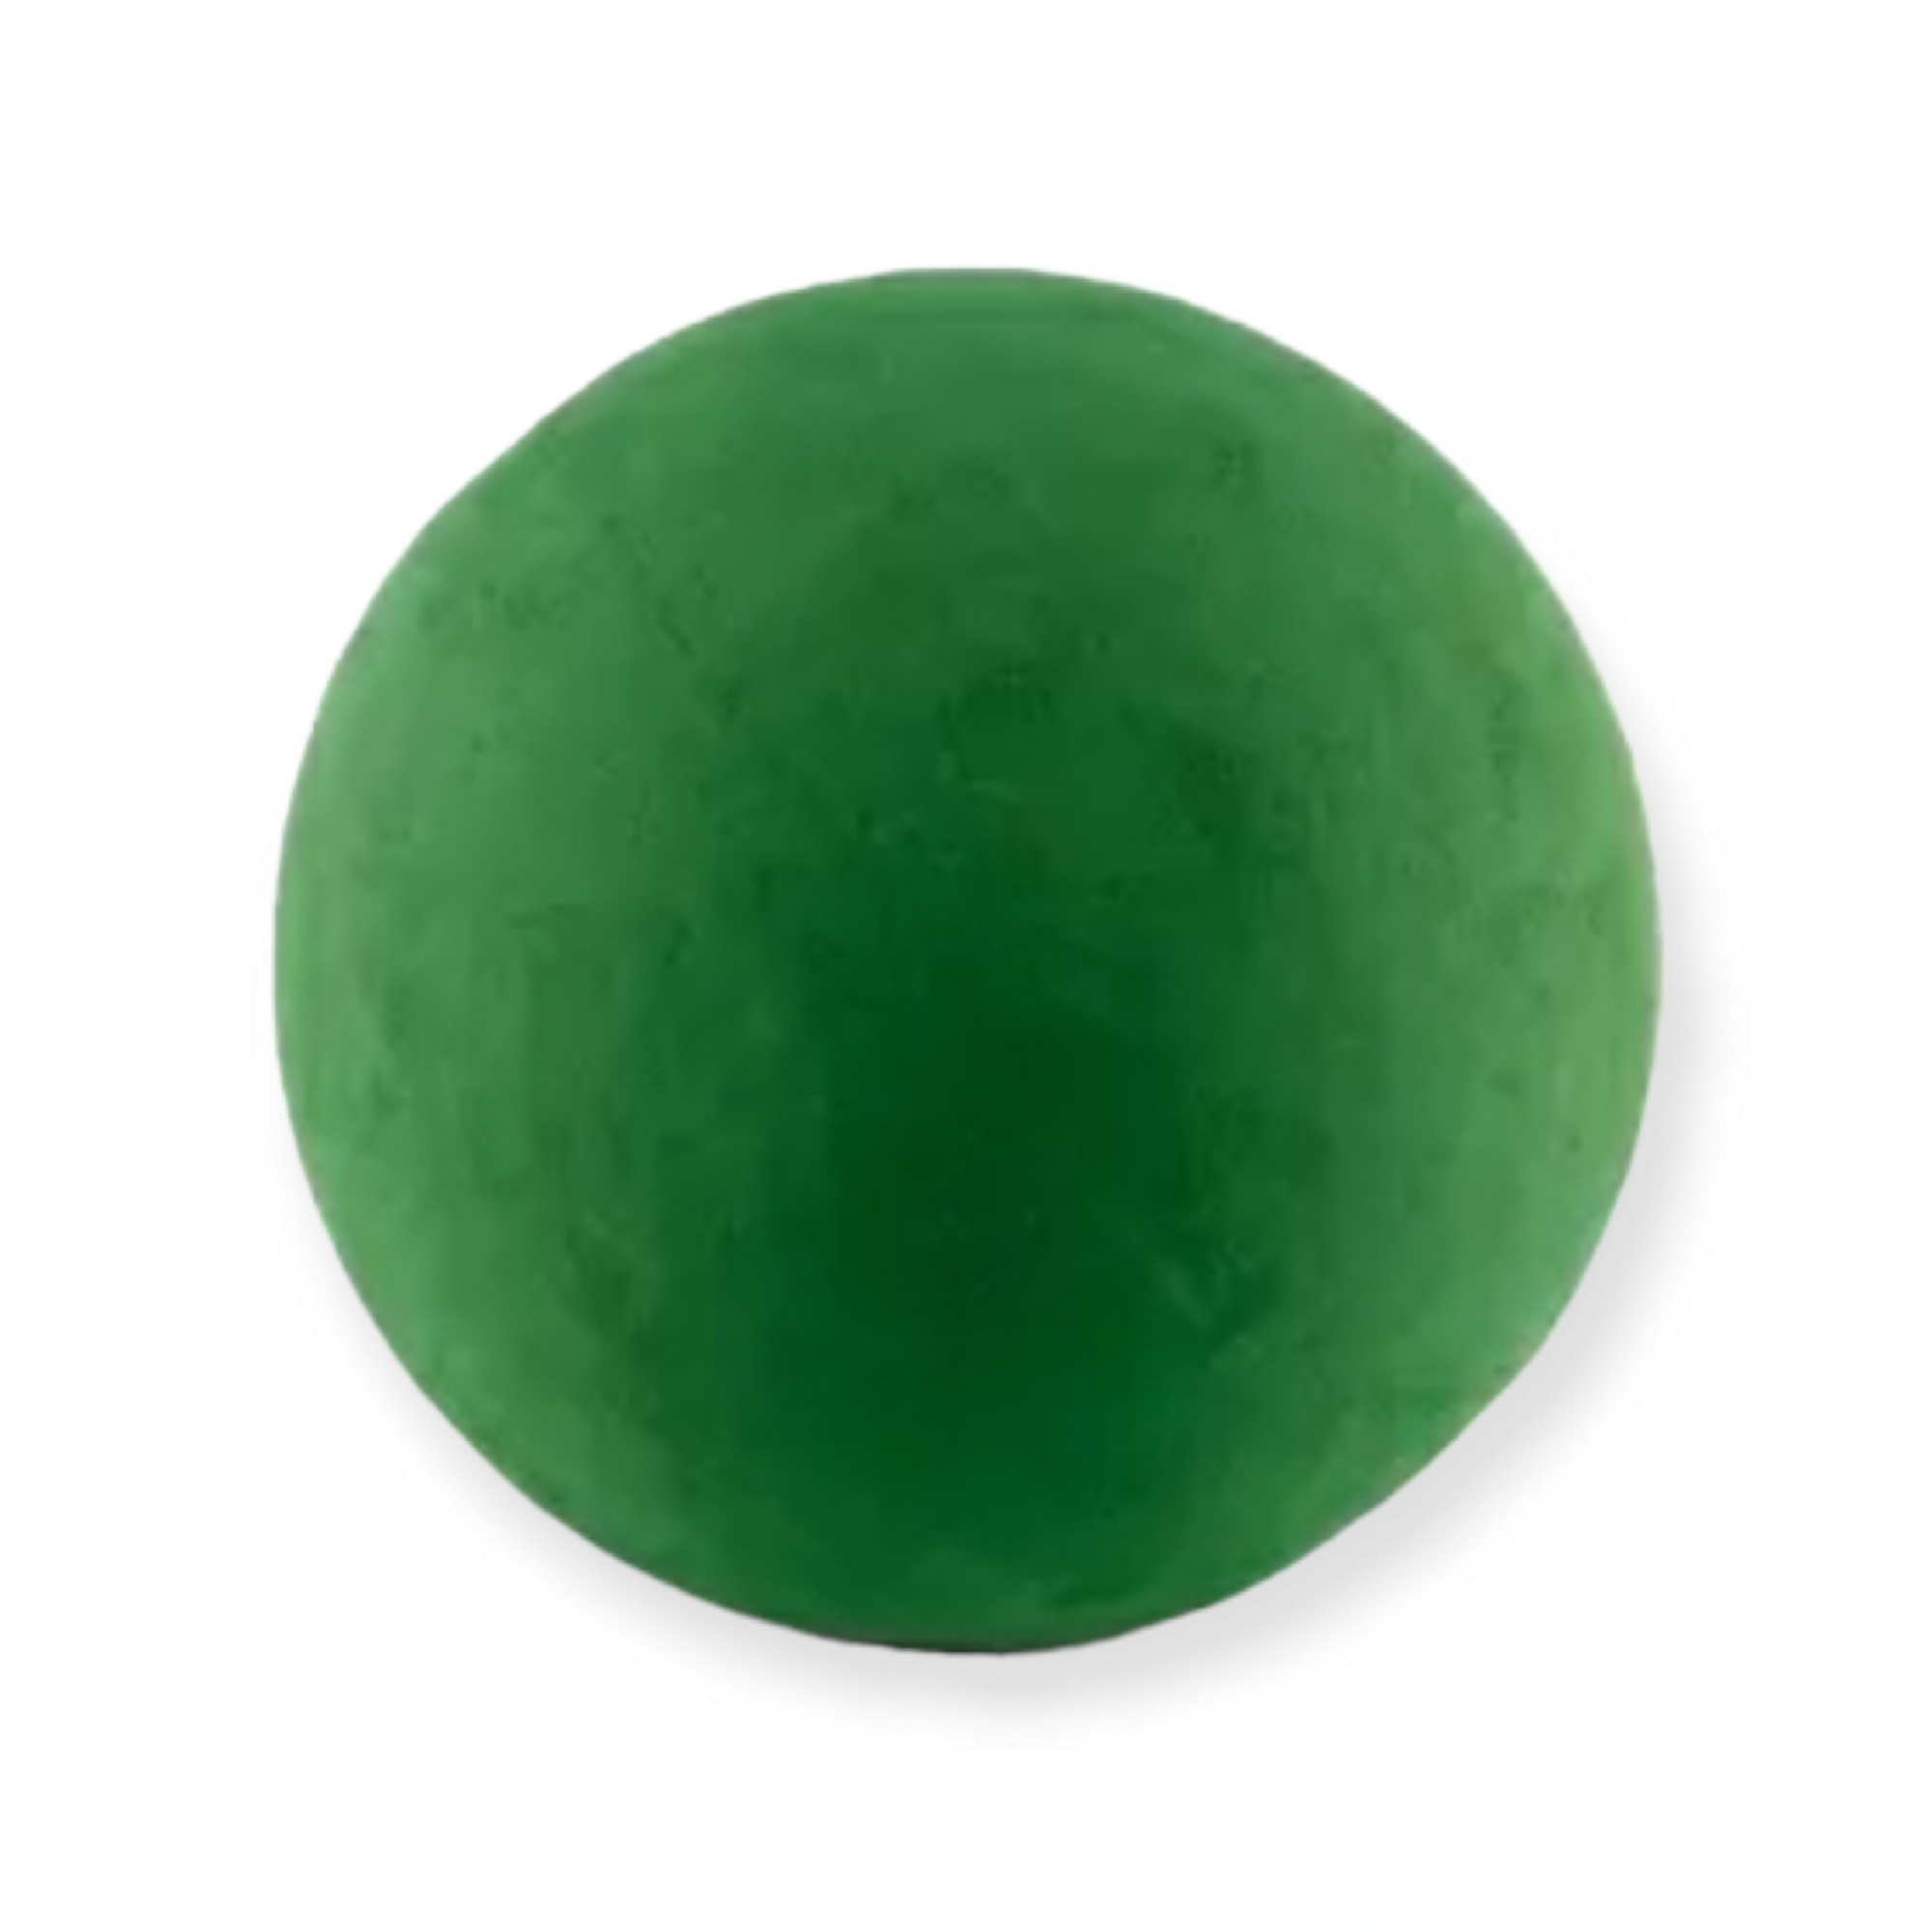 Oasis Party Balls 16cm Sphere Green Floral Foam Each